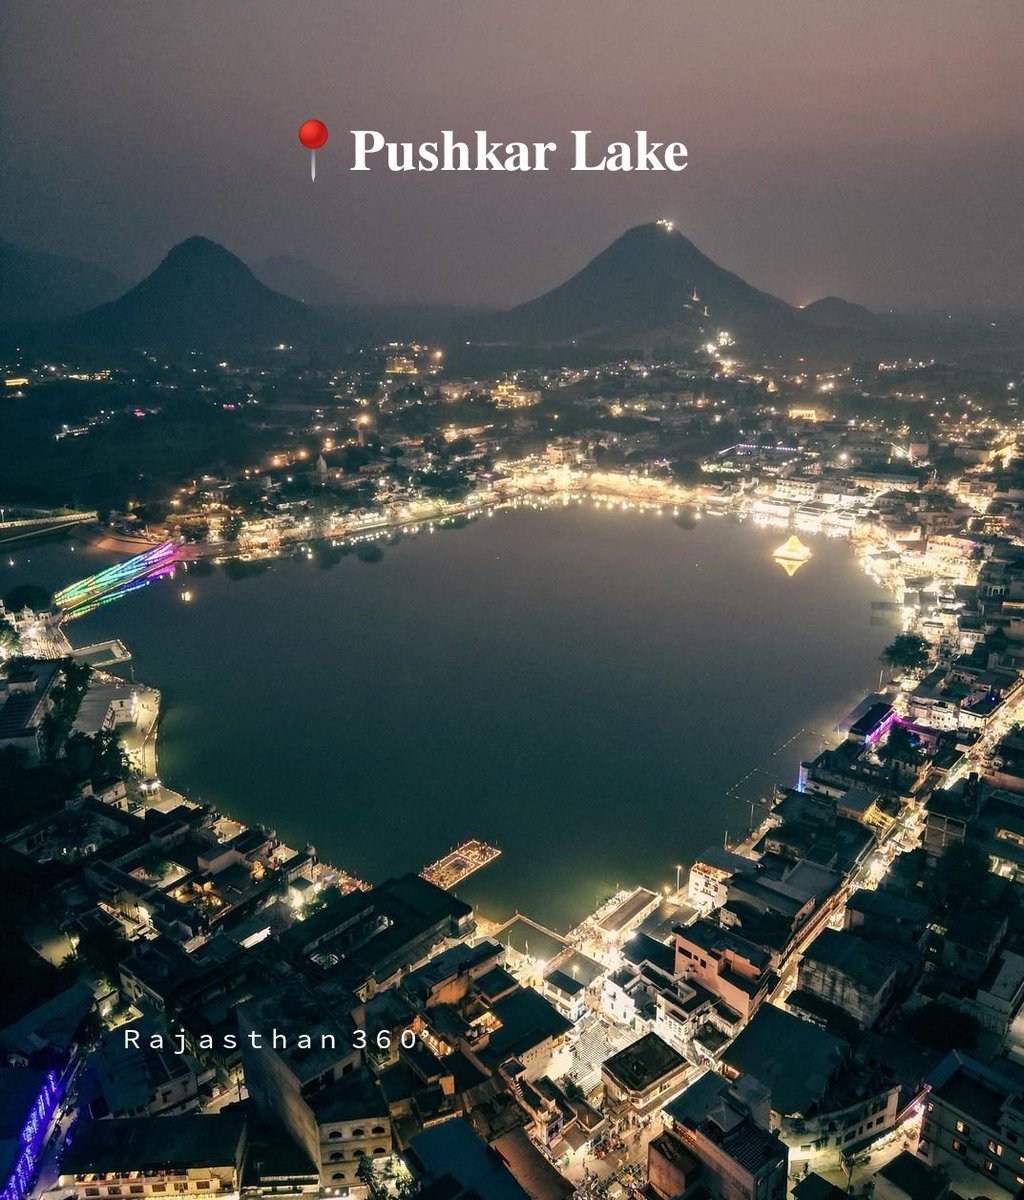 Pushkar Lake Night View 😍
.
.
#pushkar #pushkardiaries #pushkarlake #pushkarcamelfair #pushkarfair #pushkarrajasthan #pushkarmela #pushkaracing #pushkarfilms #pushkarghat #pushkarfood #pushkarcity #pushkartourism #pushkarhotels #पुष्कर #पुष्करमेला #पुष्कर_अजमेर #ajmer